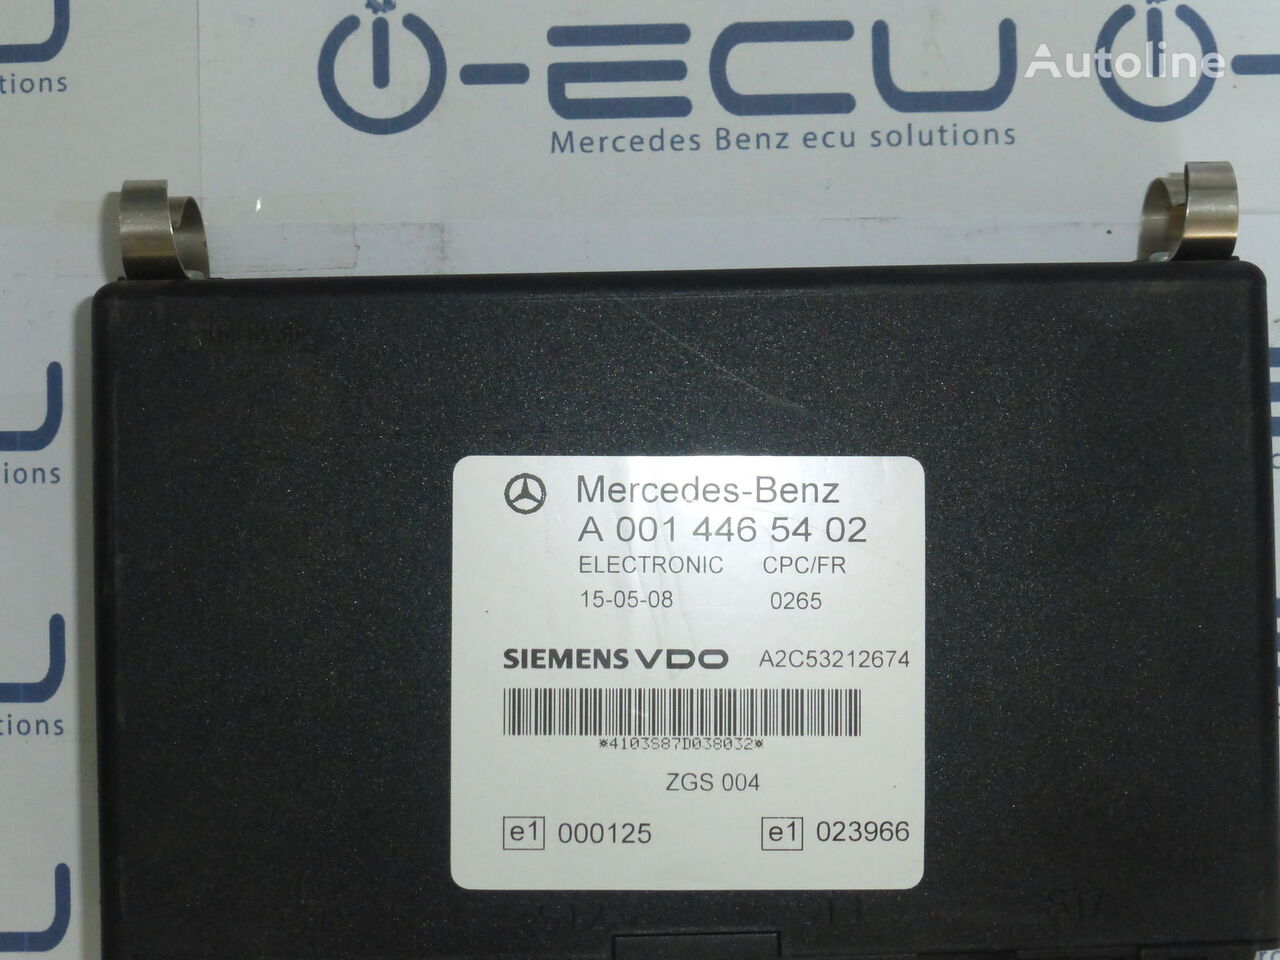 Siemens FR/CPC A 0014465402 control unit for Mercedes-Benz ACTROS truck